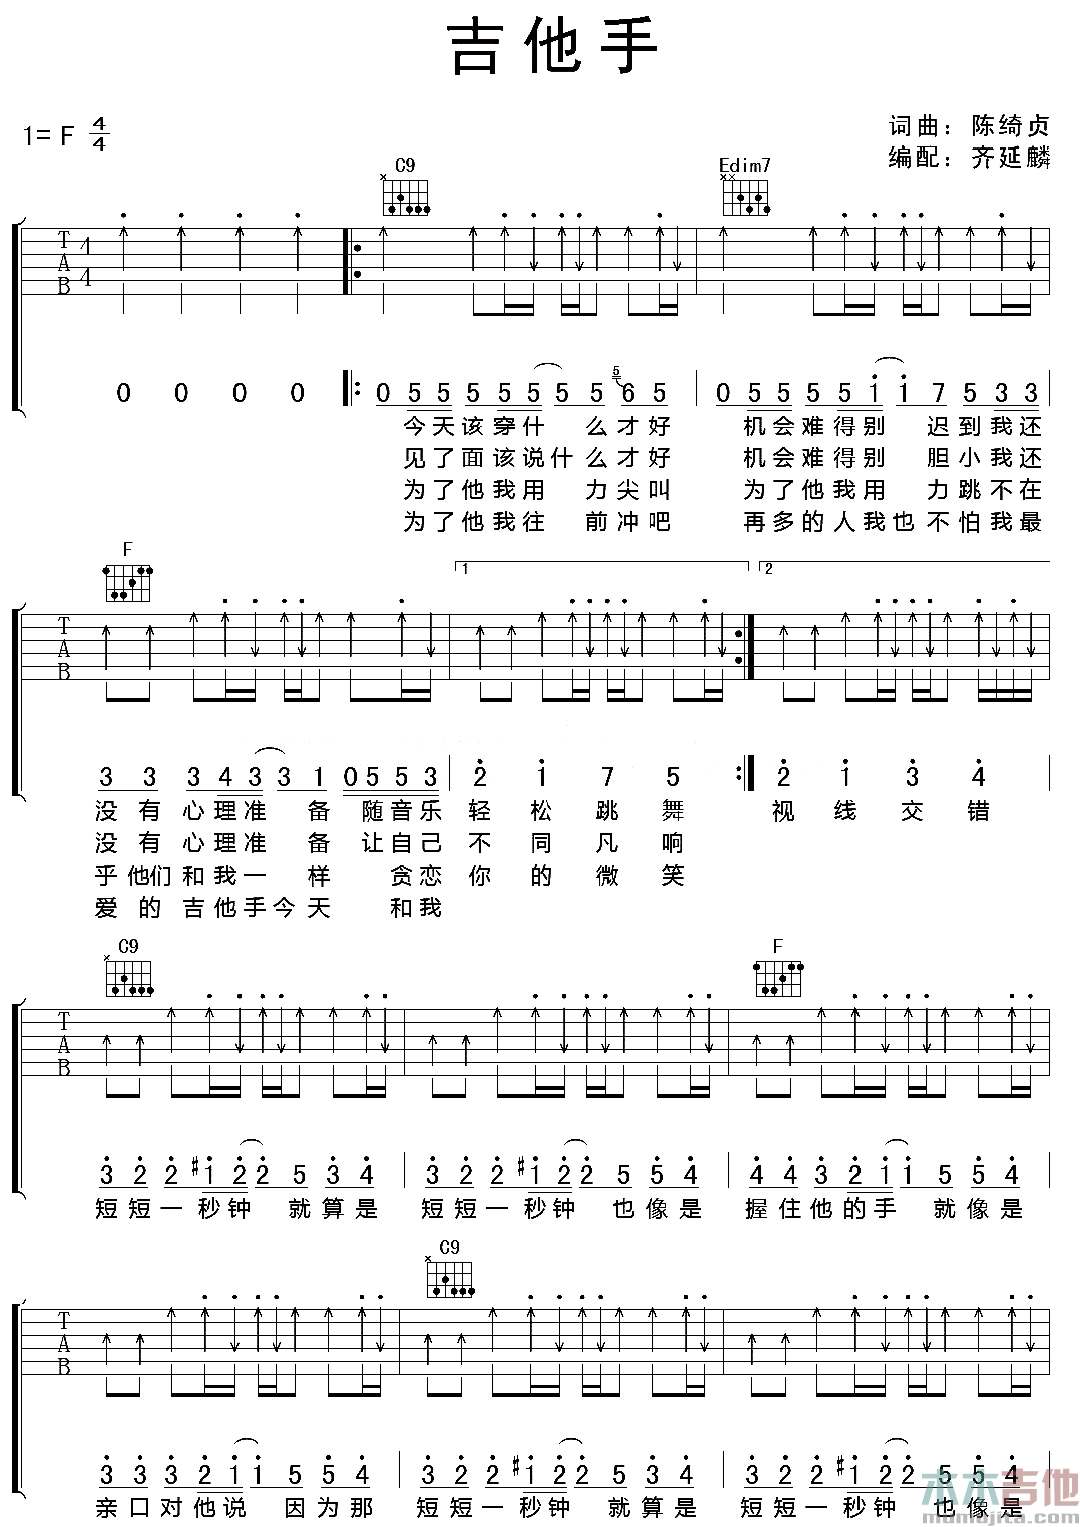 陈绮贞《吉他手》吉他谱-Guitar Music Score